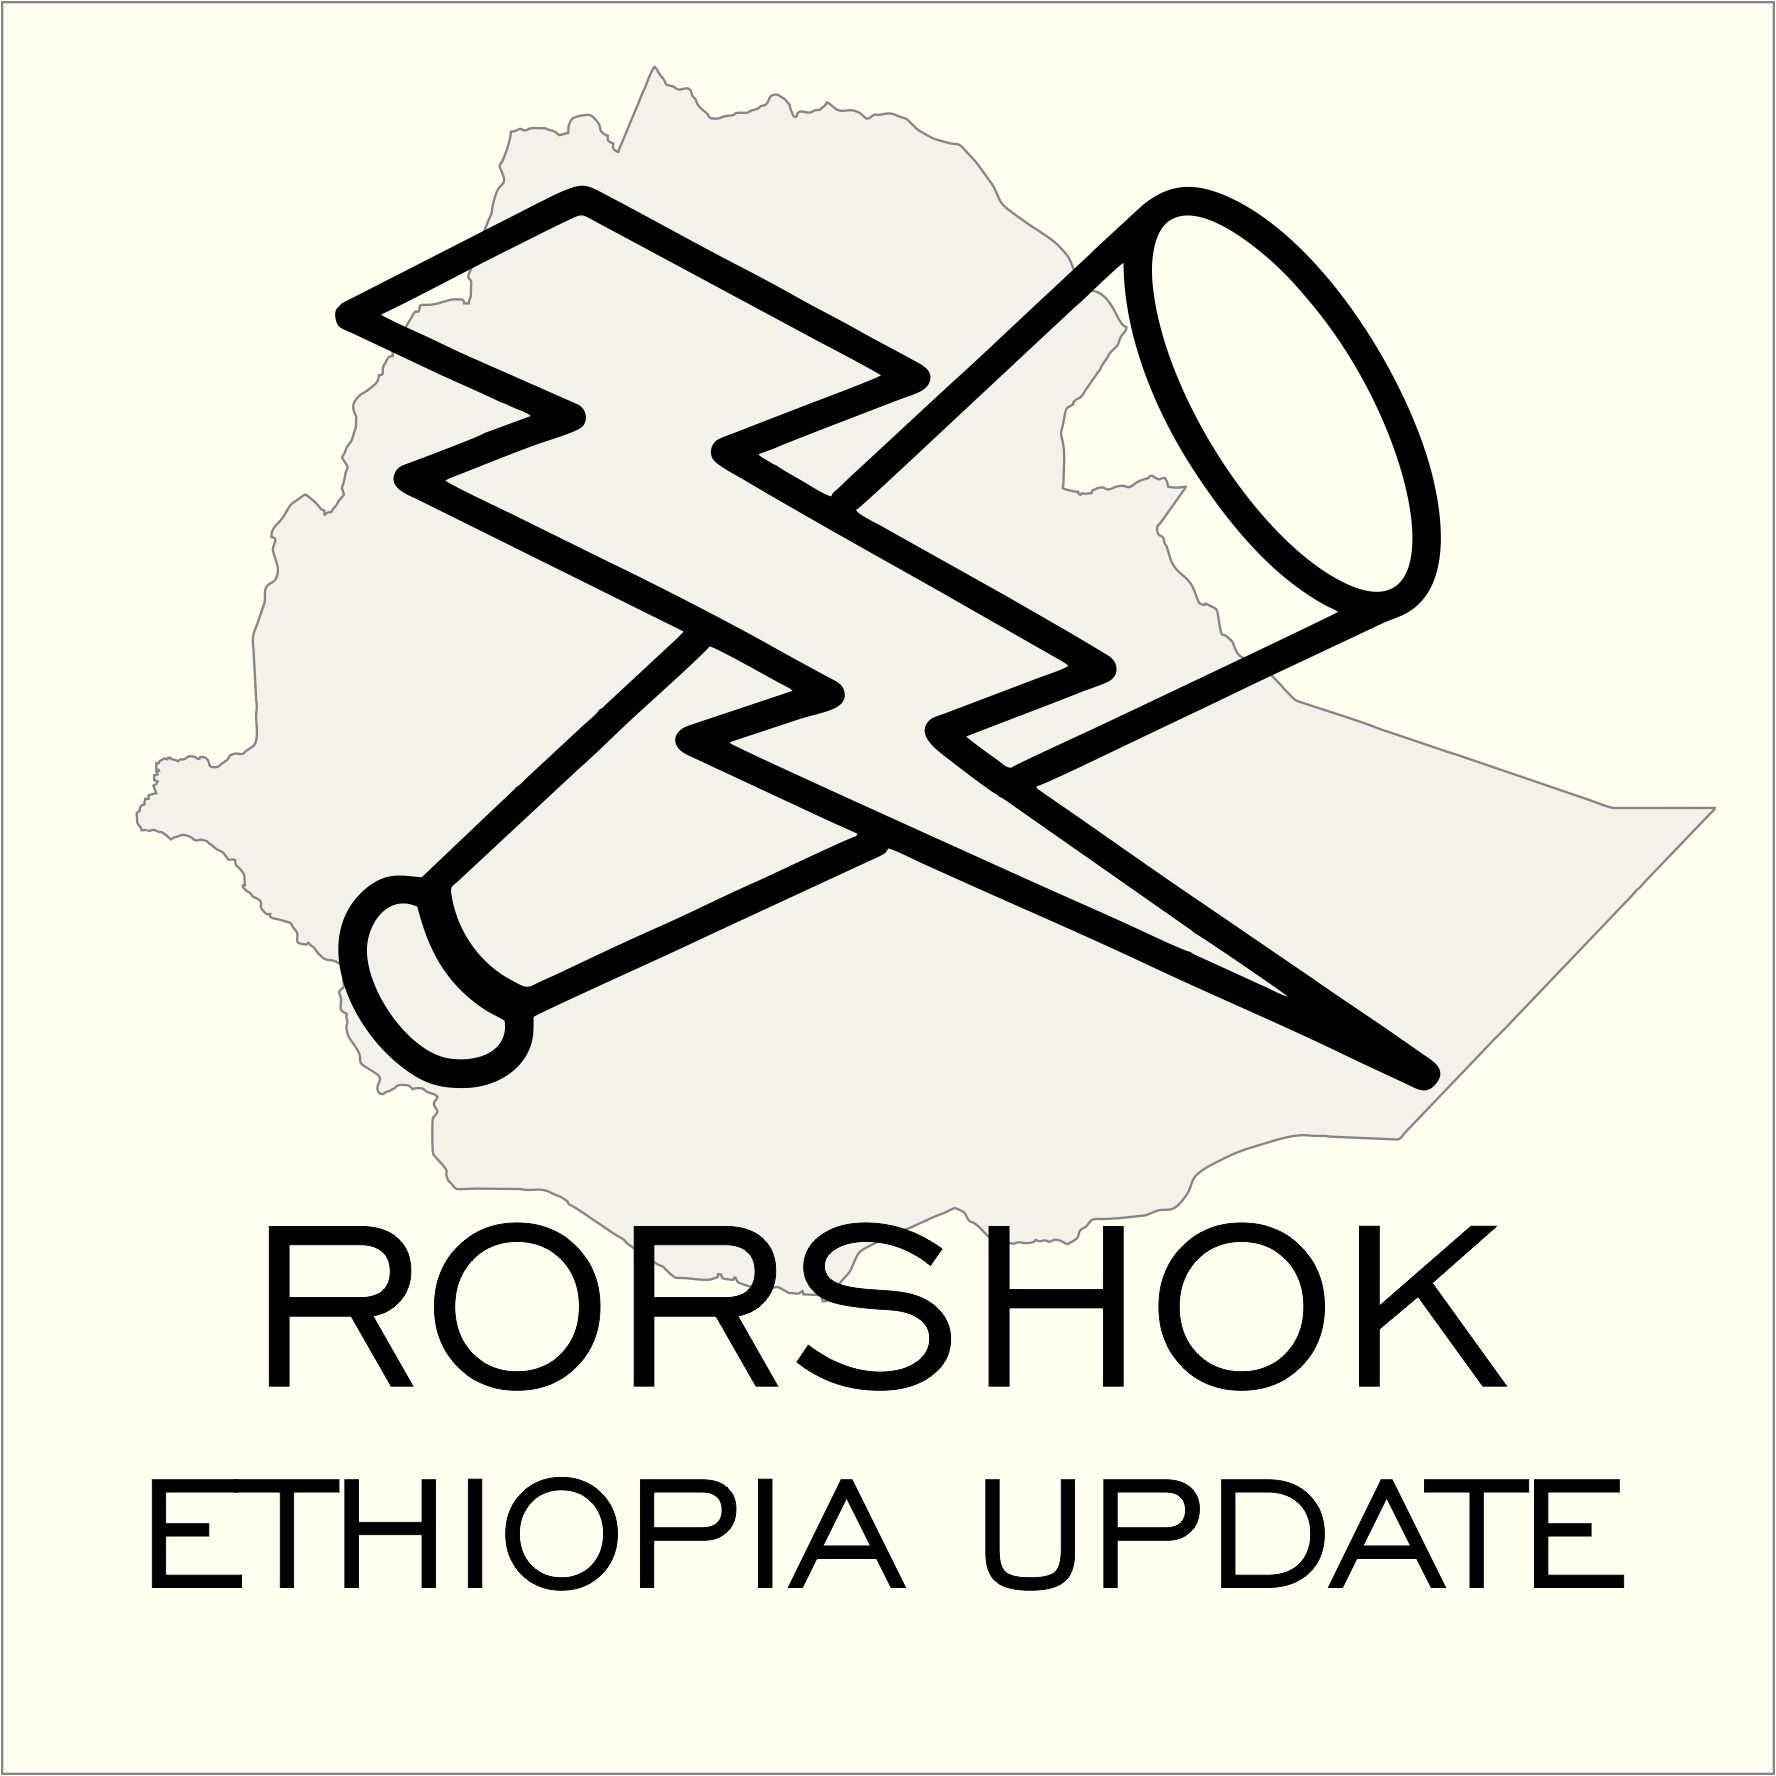 Artwork for podcast Rorshok Ethiopia Update